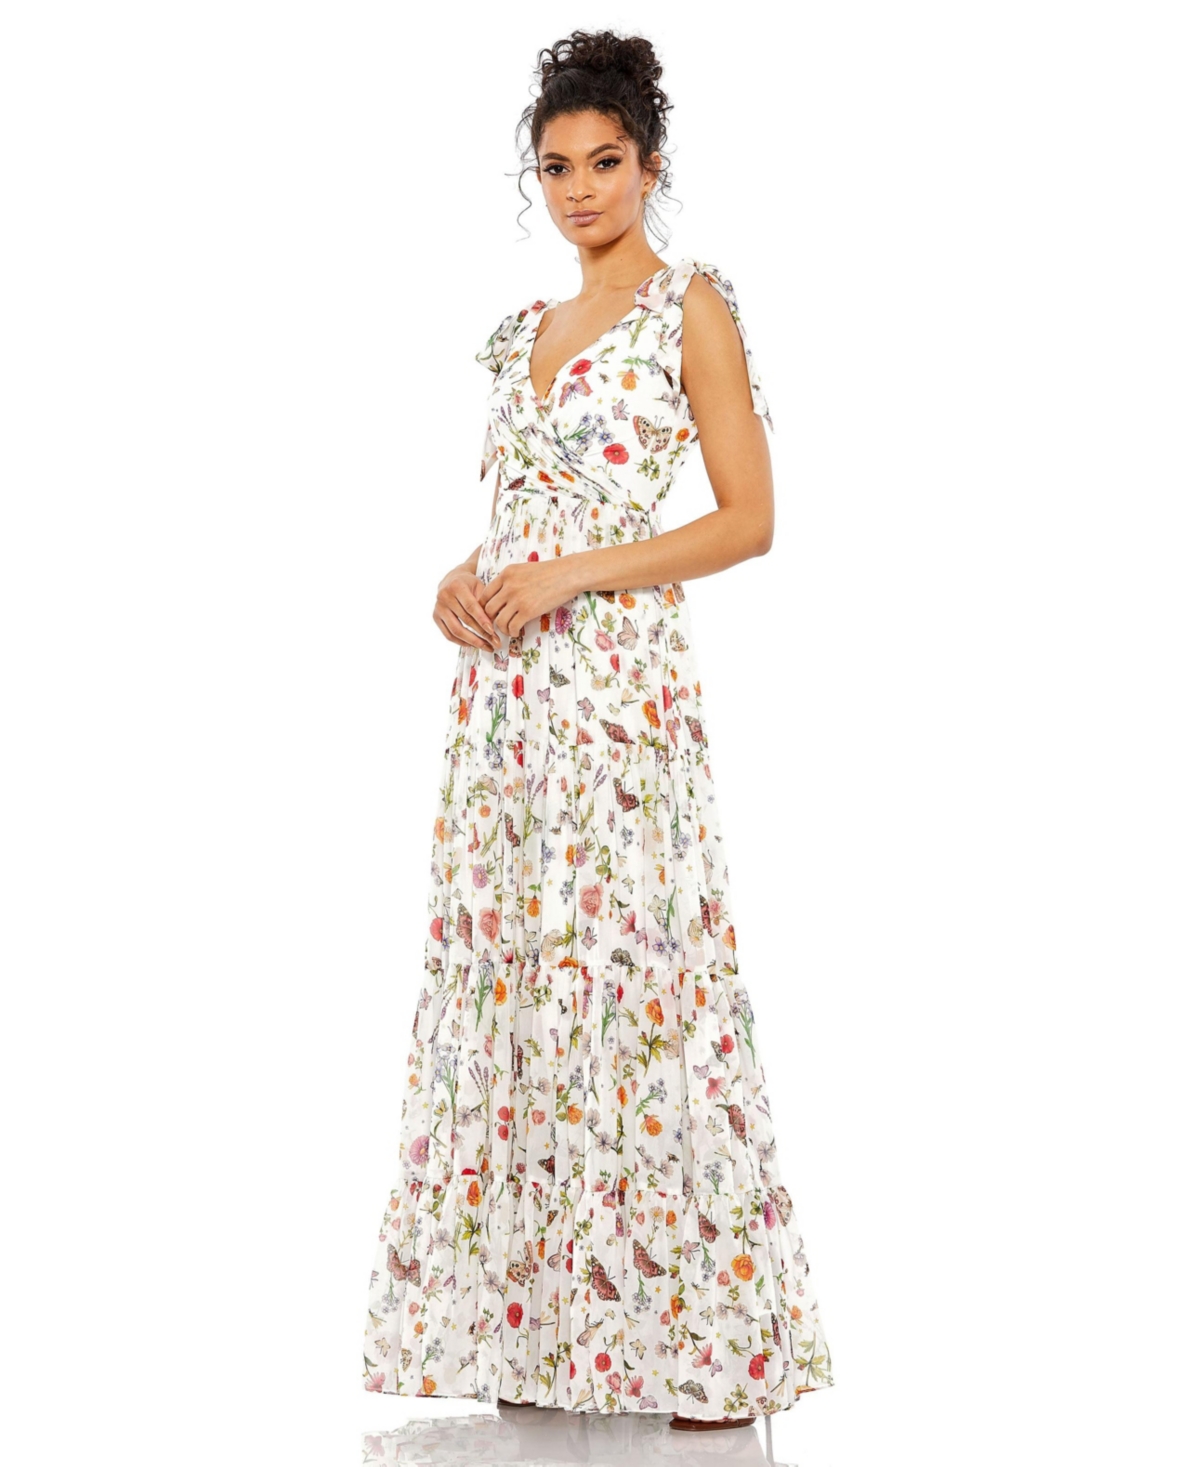 Women's Ieena Floral Print Sleeveless Soft Tie Shoulder Gown - White multi